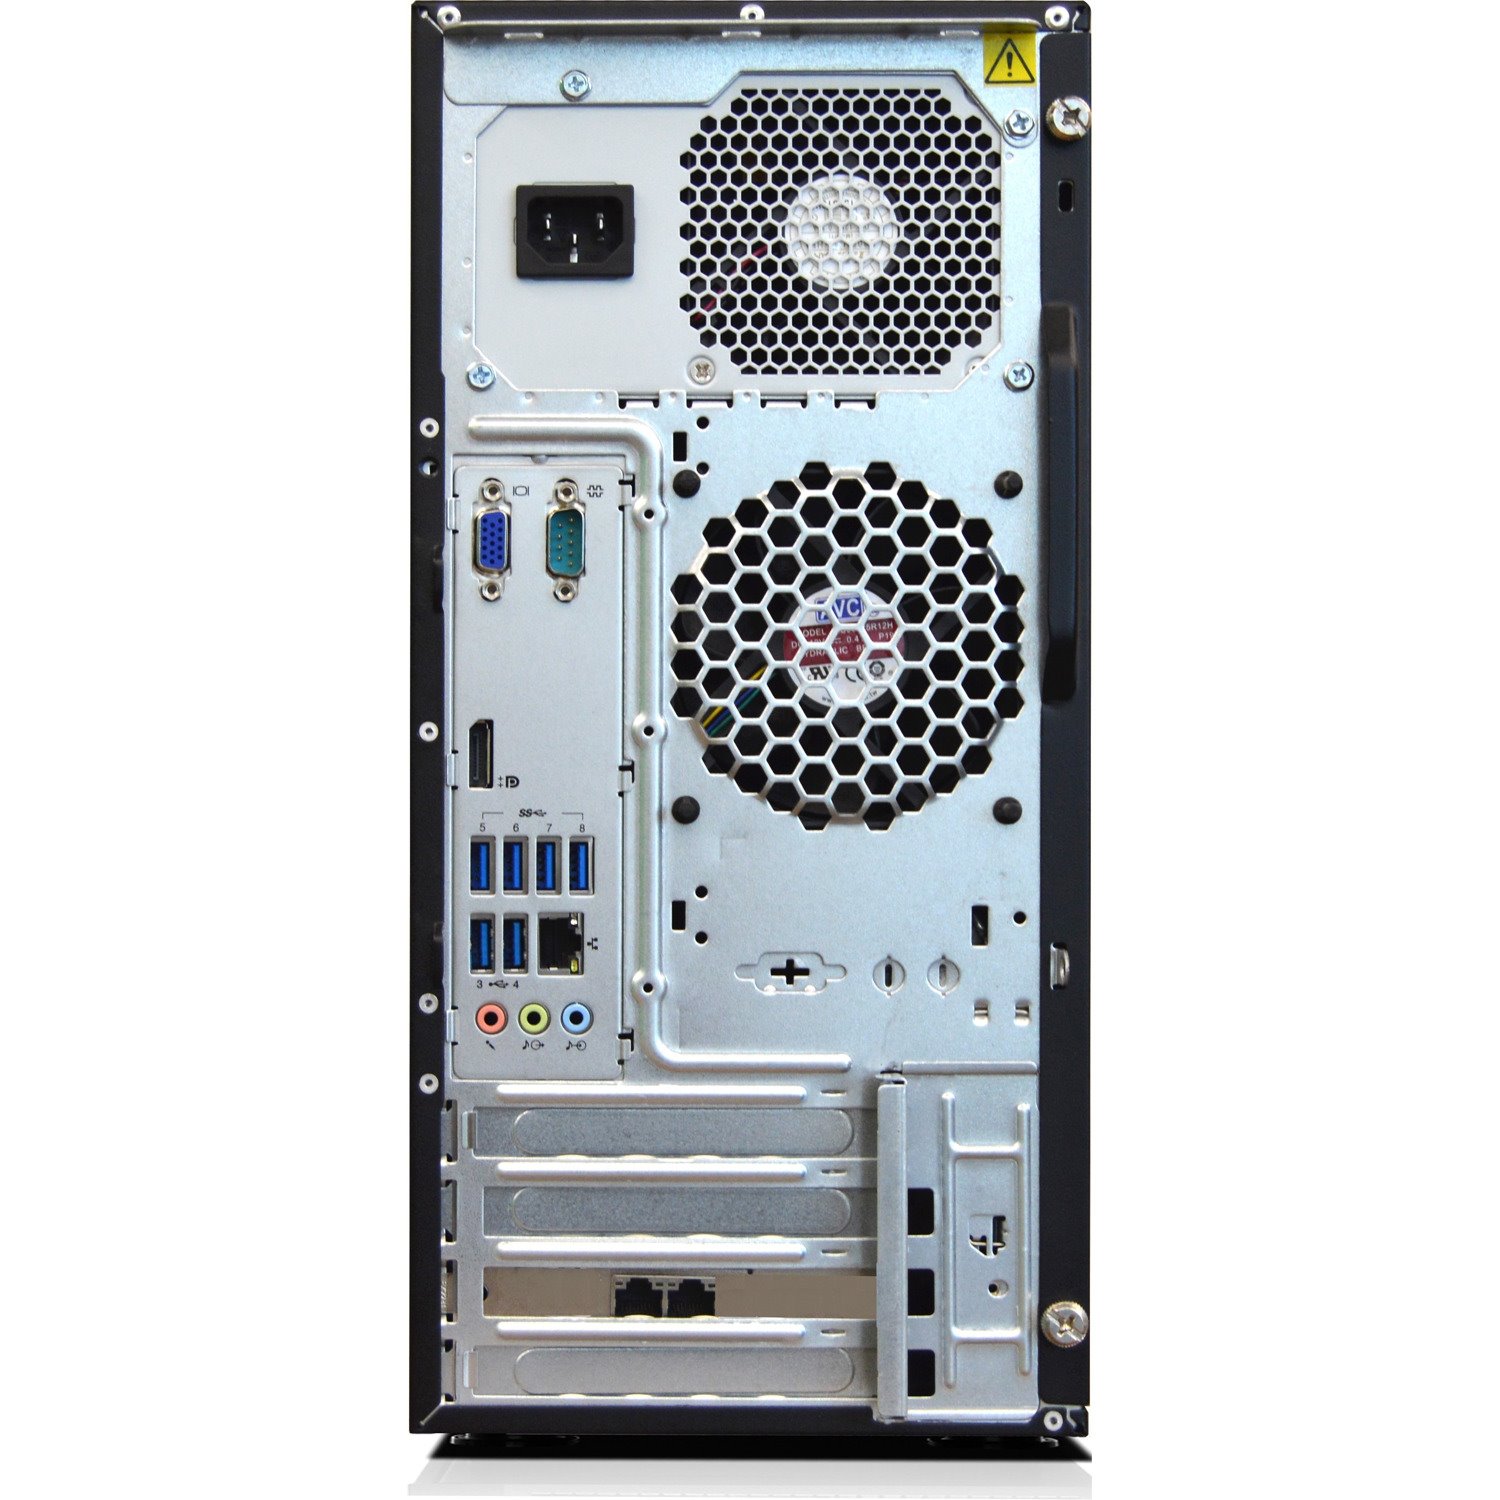 Lenovo ThinkServer TS150 70UB0028AZ 4U Tower Server - 1 x Intel Xeon E3-1245 v6 3.70 GHz - 8 GB RAM - Serial ATA/600 Controller